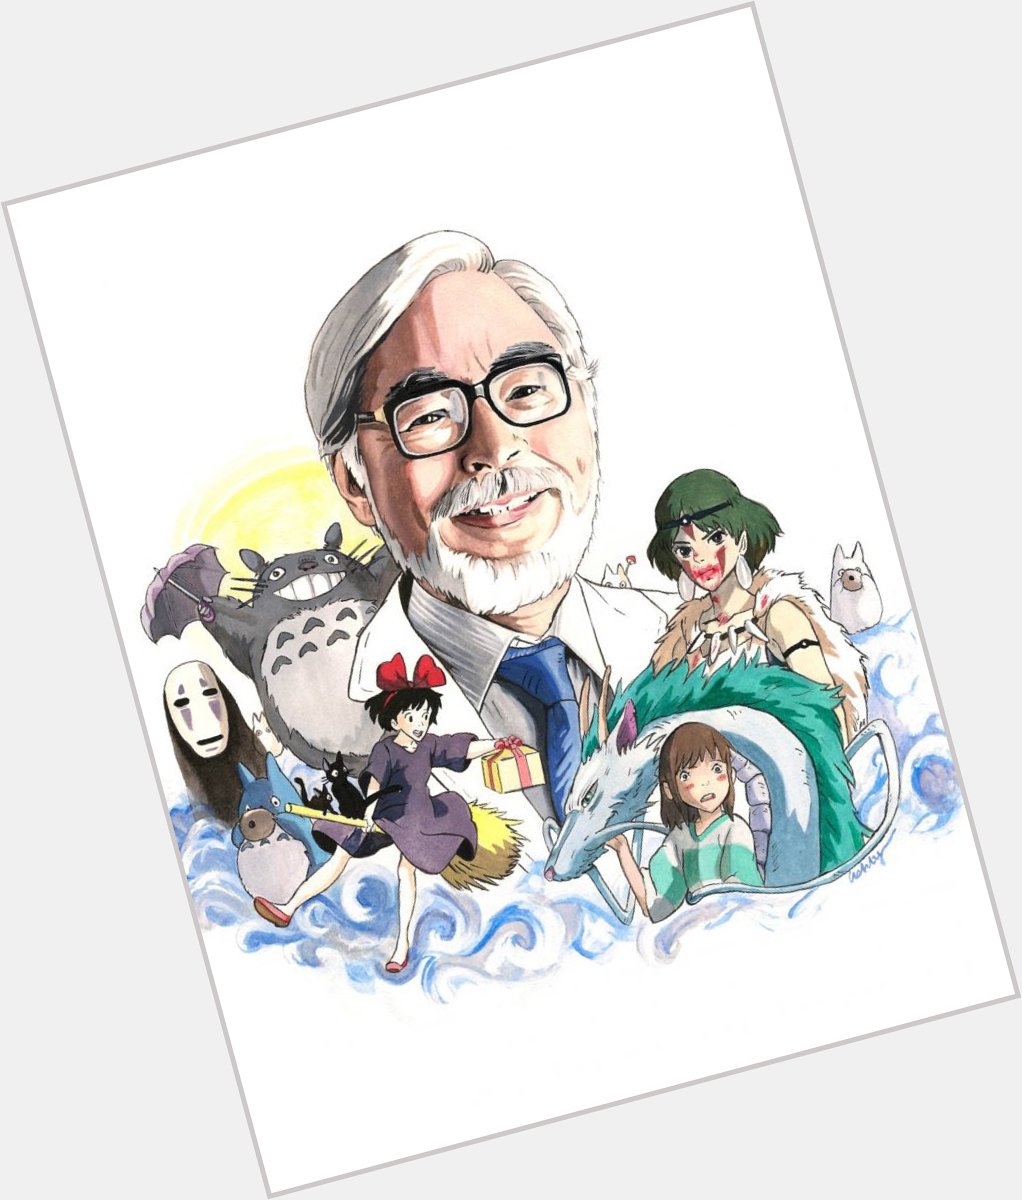 Happy 78th Birthday to a true master, Hayao Miyazaki. 

(art by 